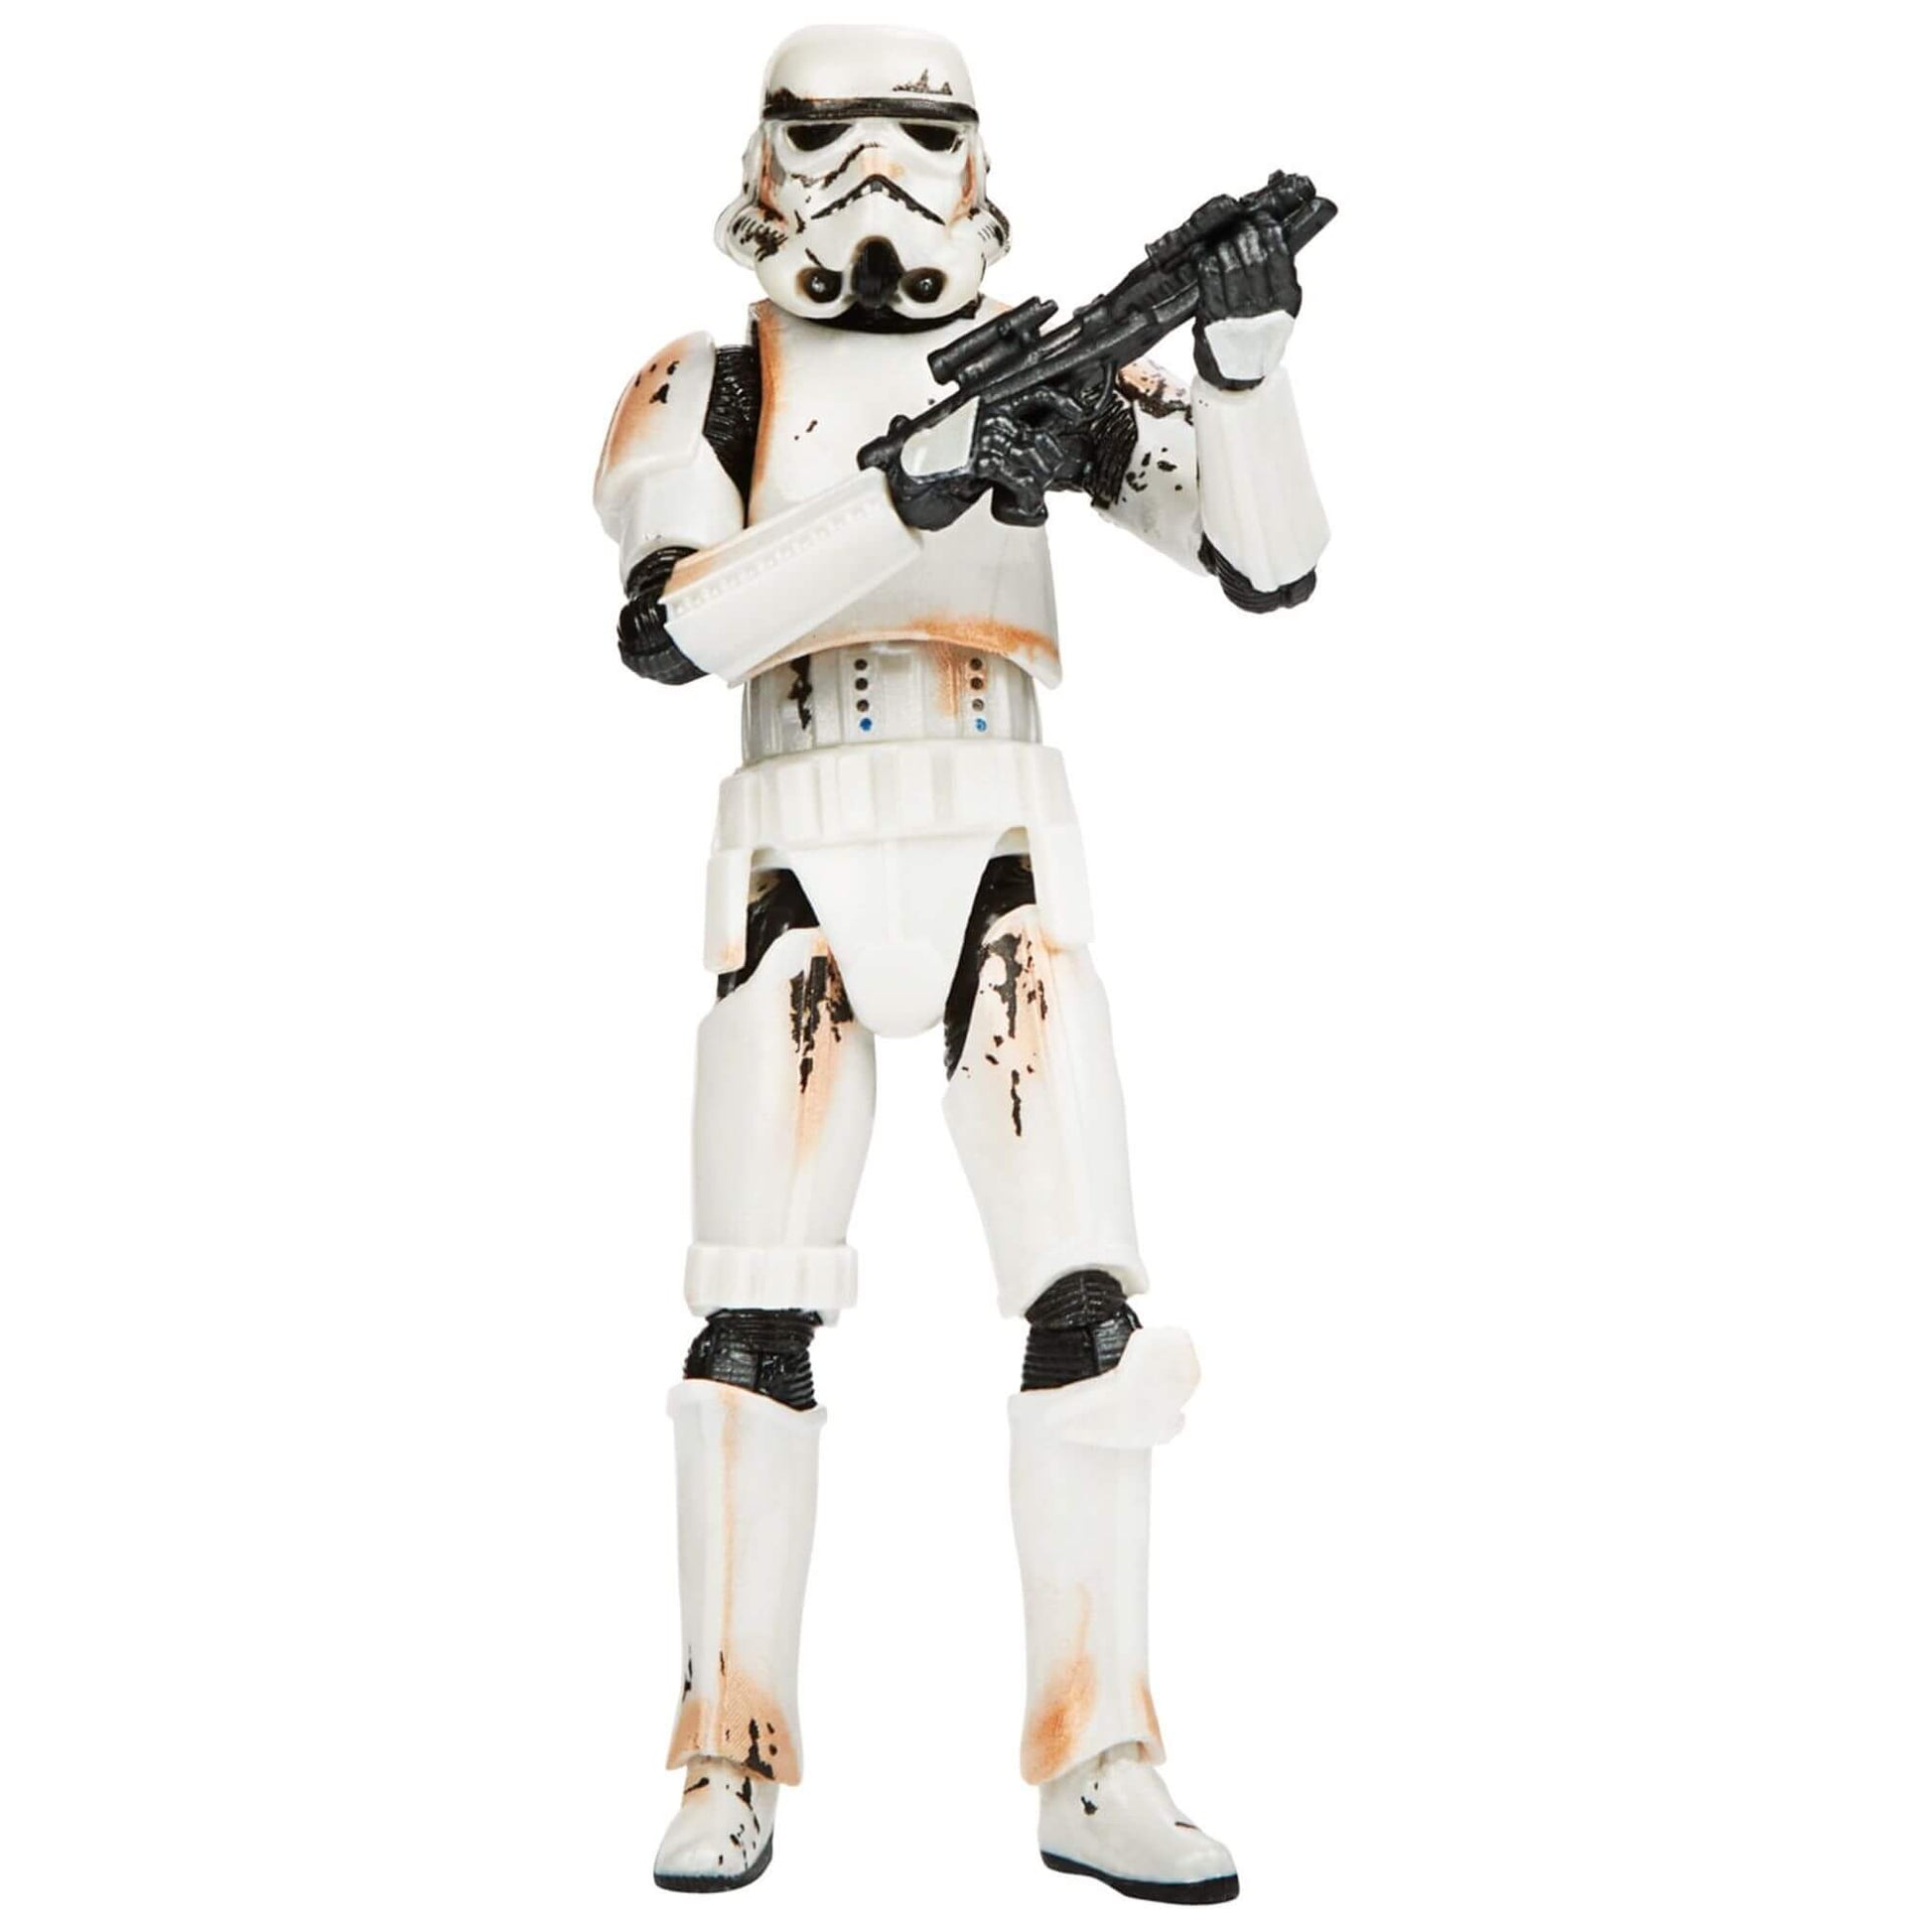 Star Wars The Vintage Collection Carbonized Remnant Stormtrooper action figure holding blaster